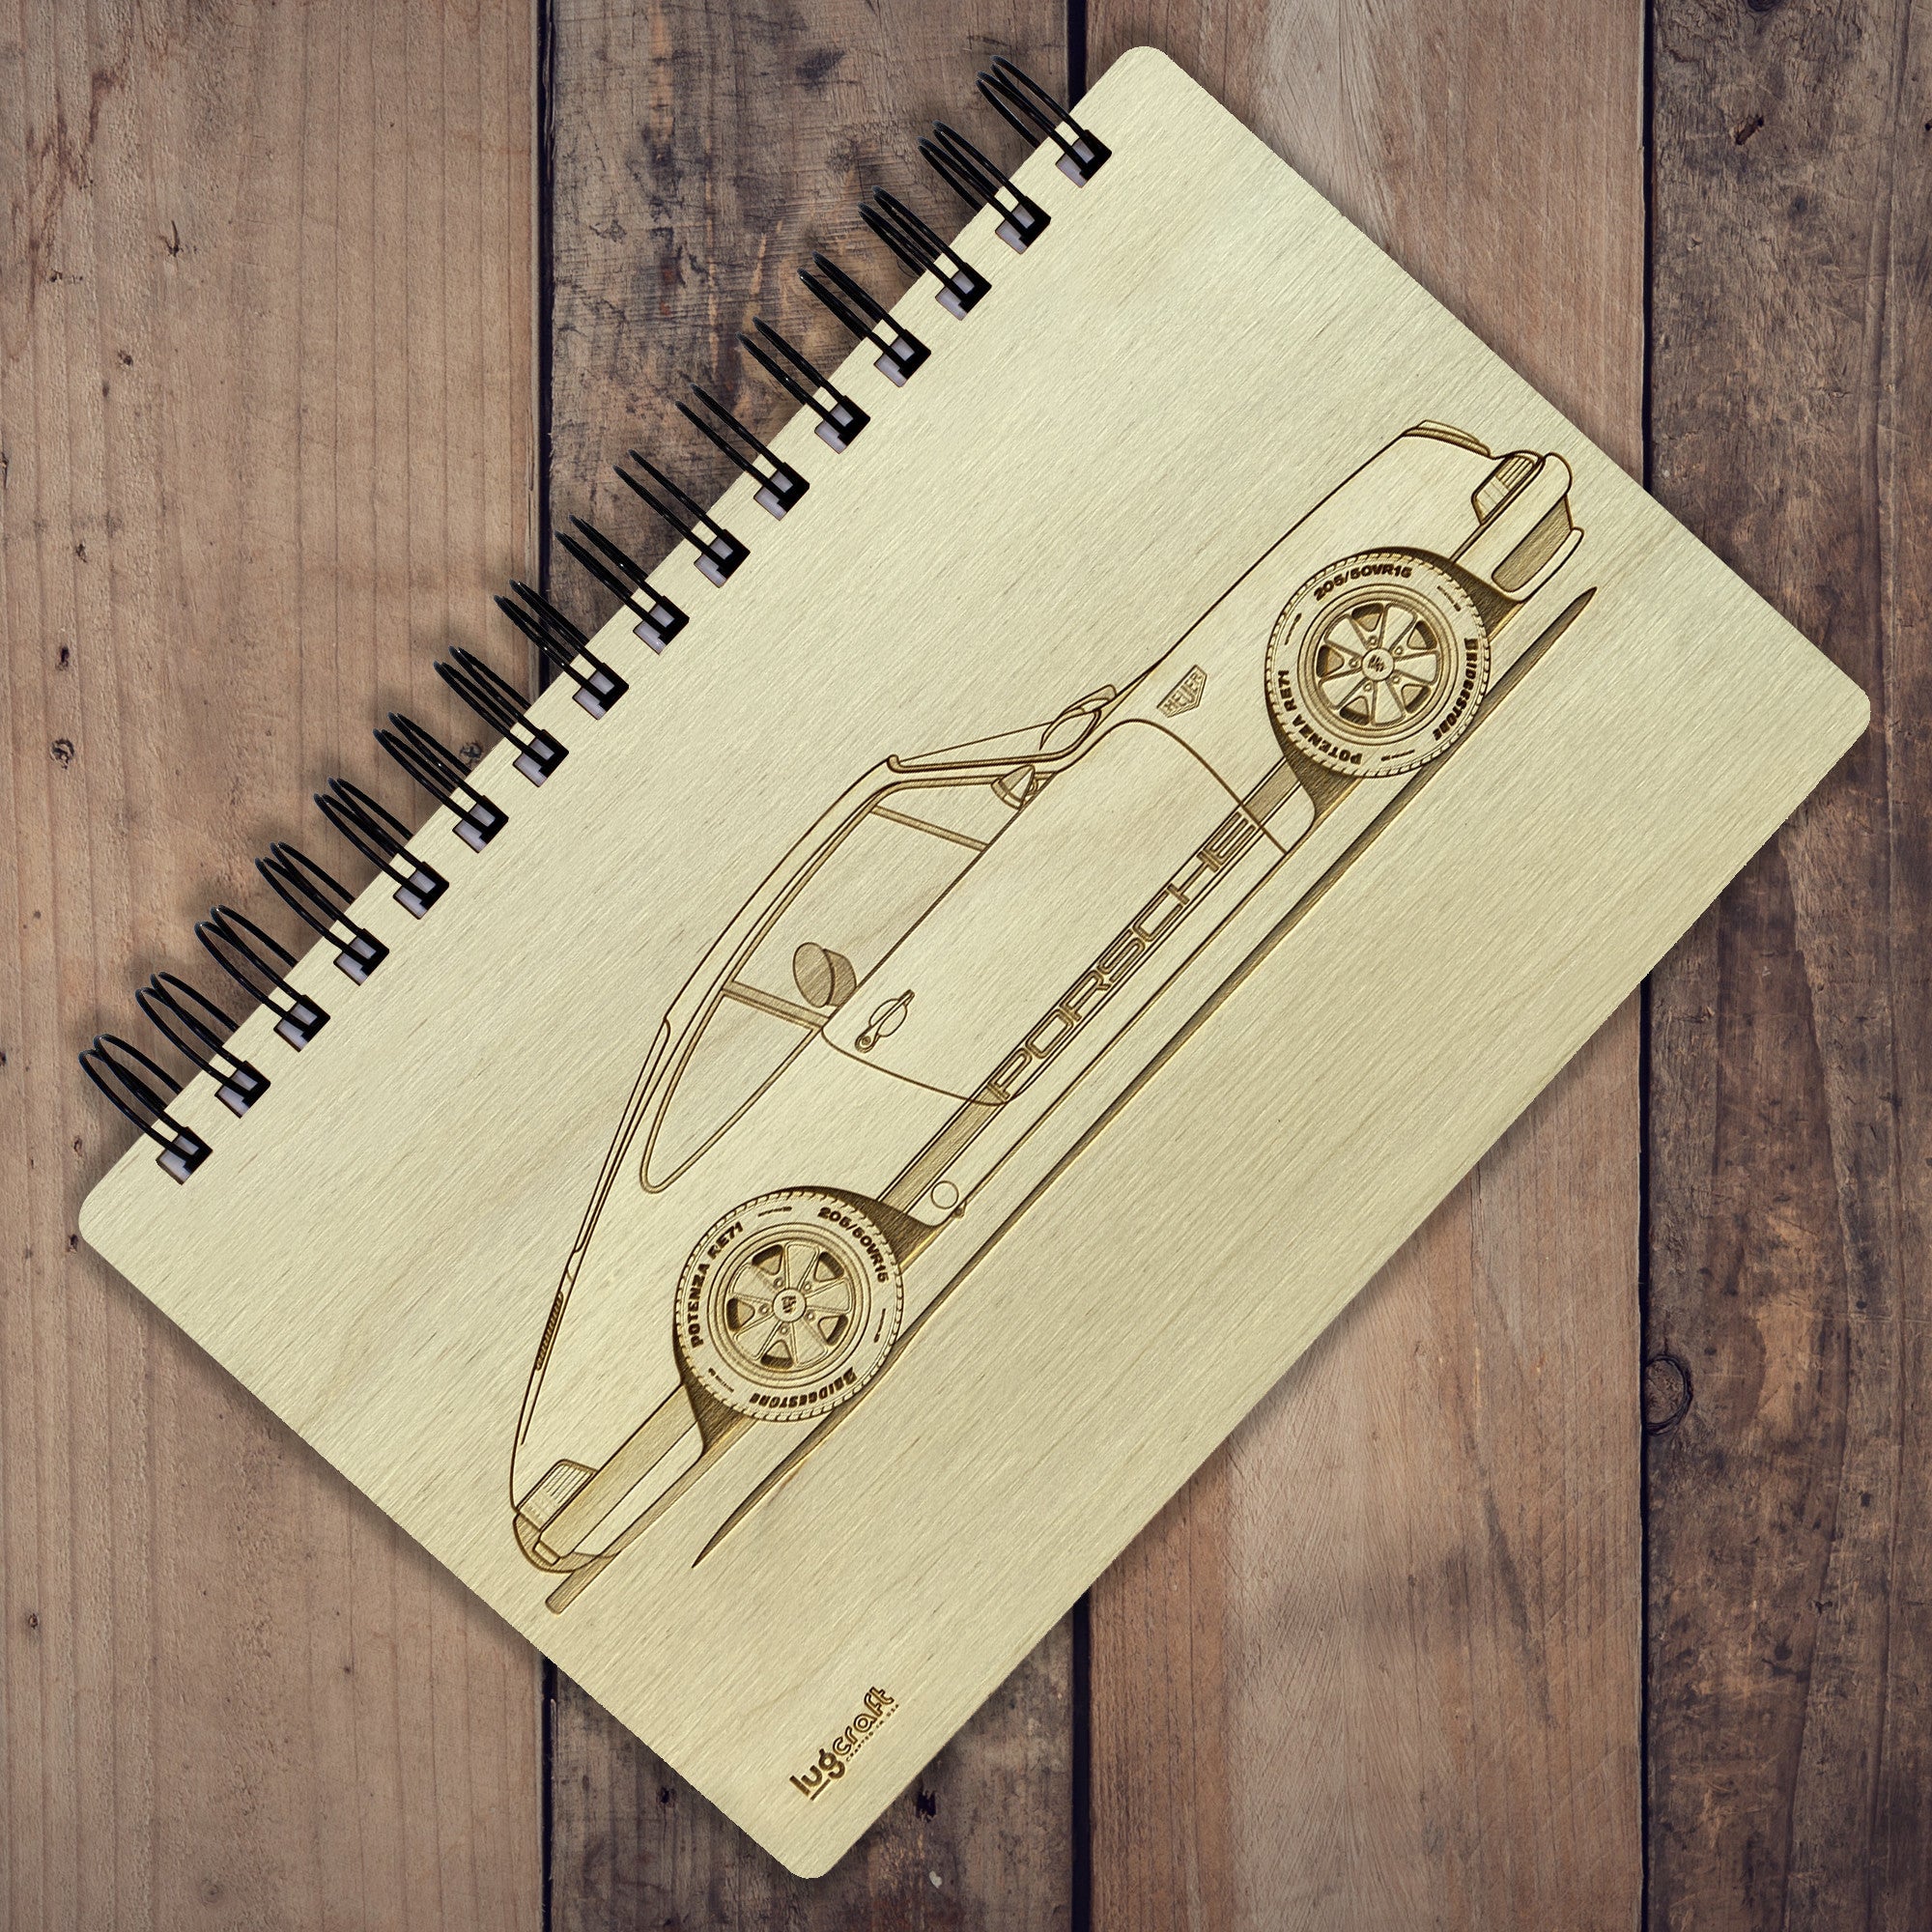 Porsche 911 "Heuer" Engraved Notebook - 6" x 9" - Lugcraft Inc